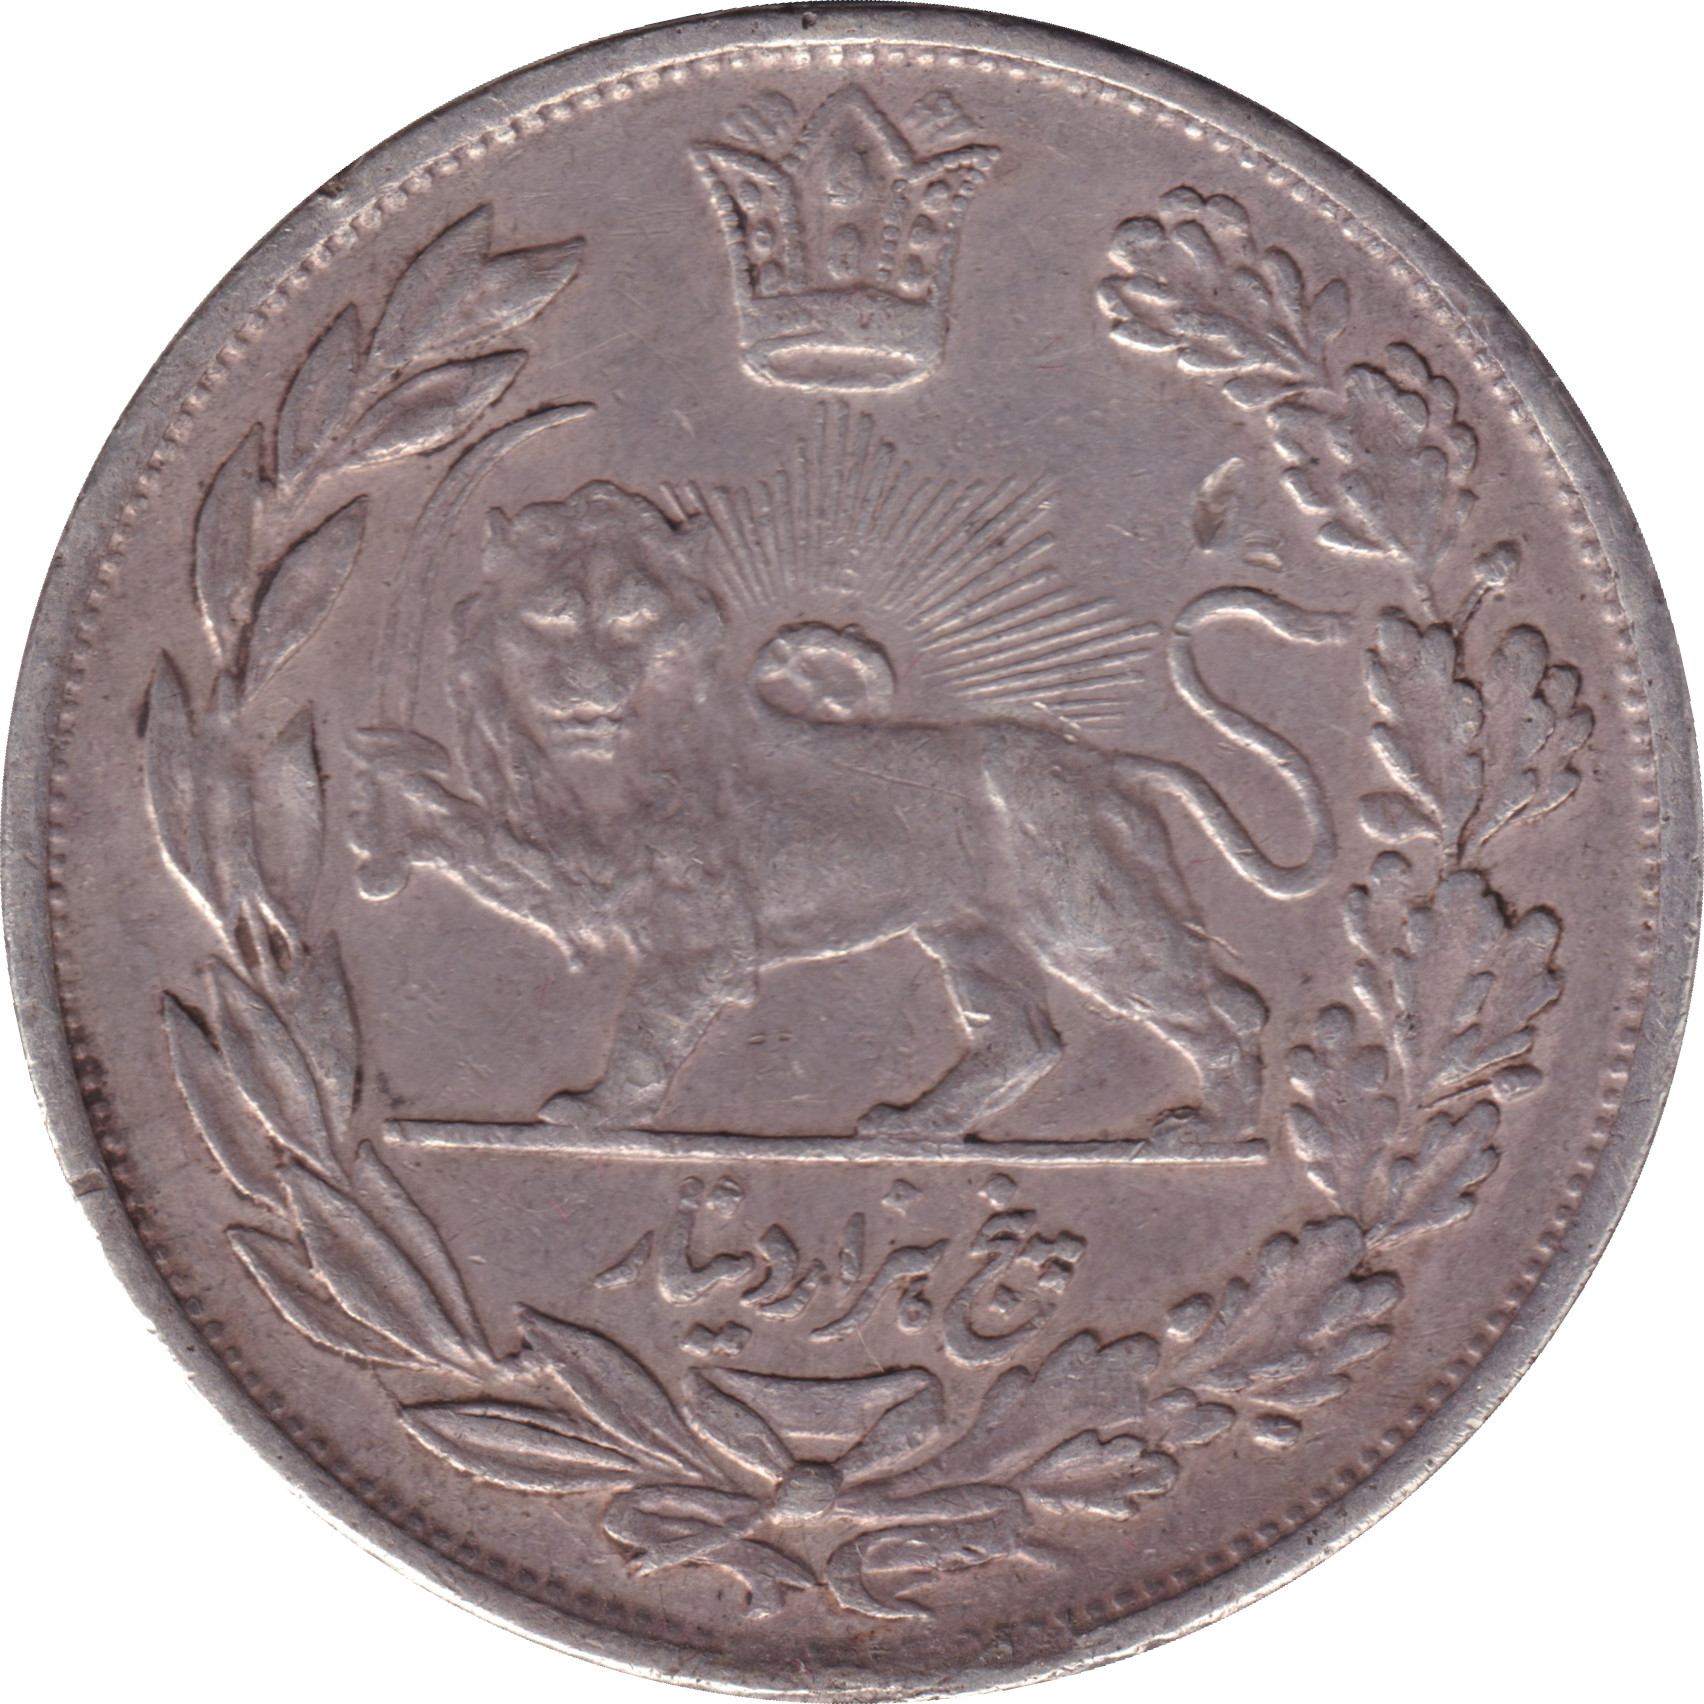 5000 dinars - Sultan Ahmad Shah - Argent - Buste